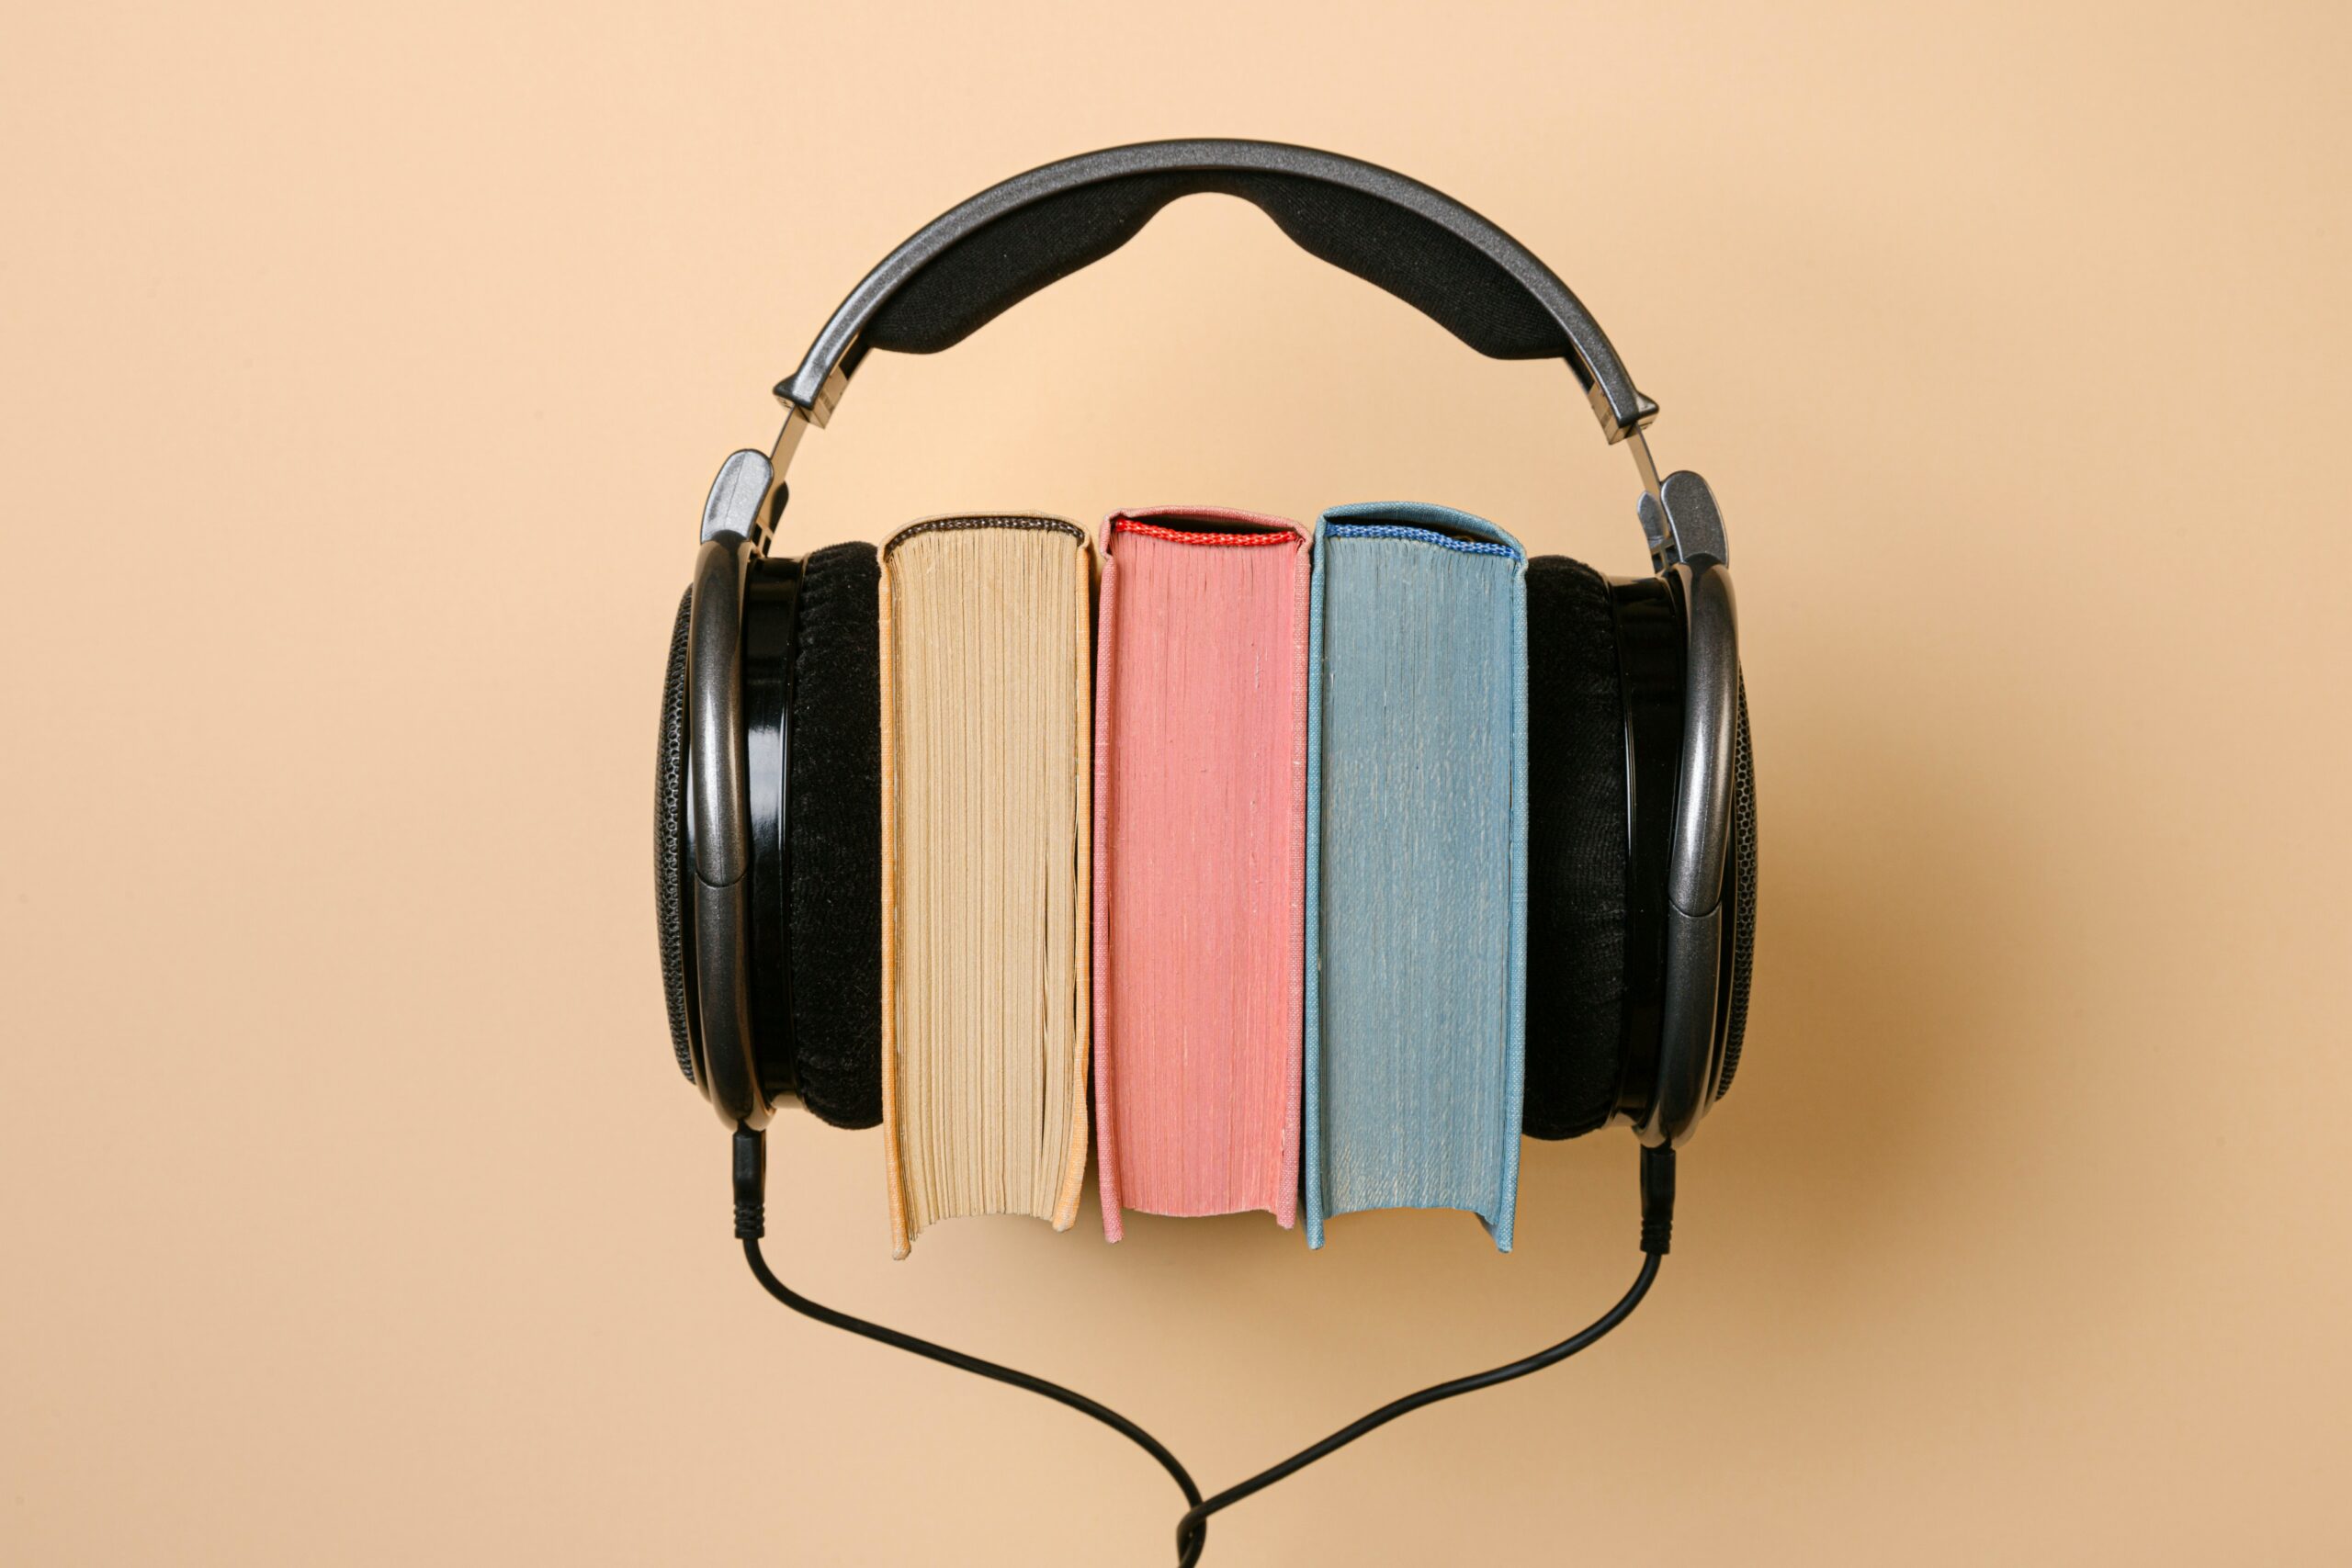 listen to a relaxing audiobook